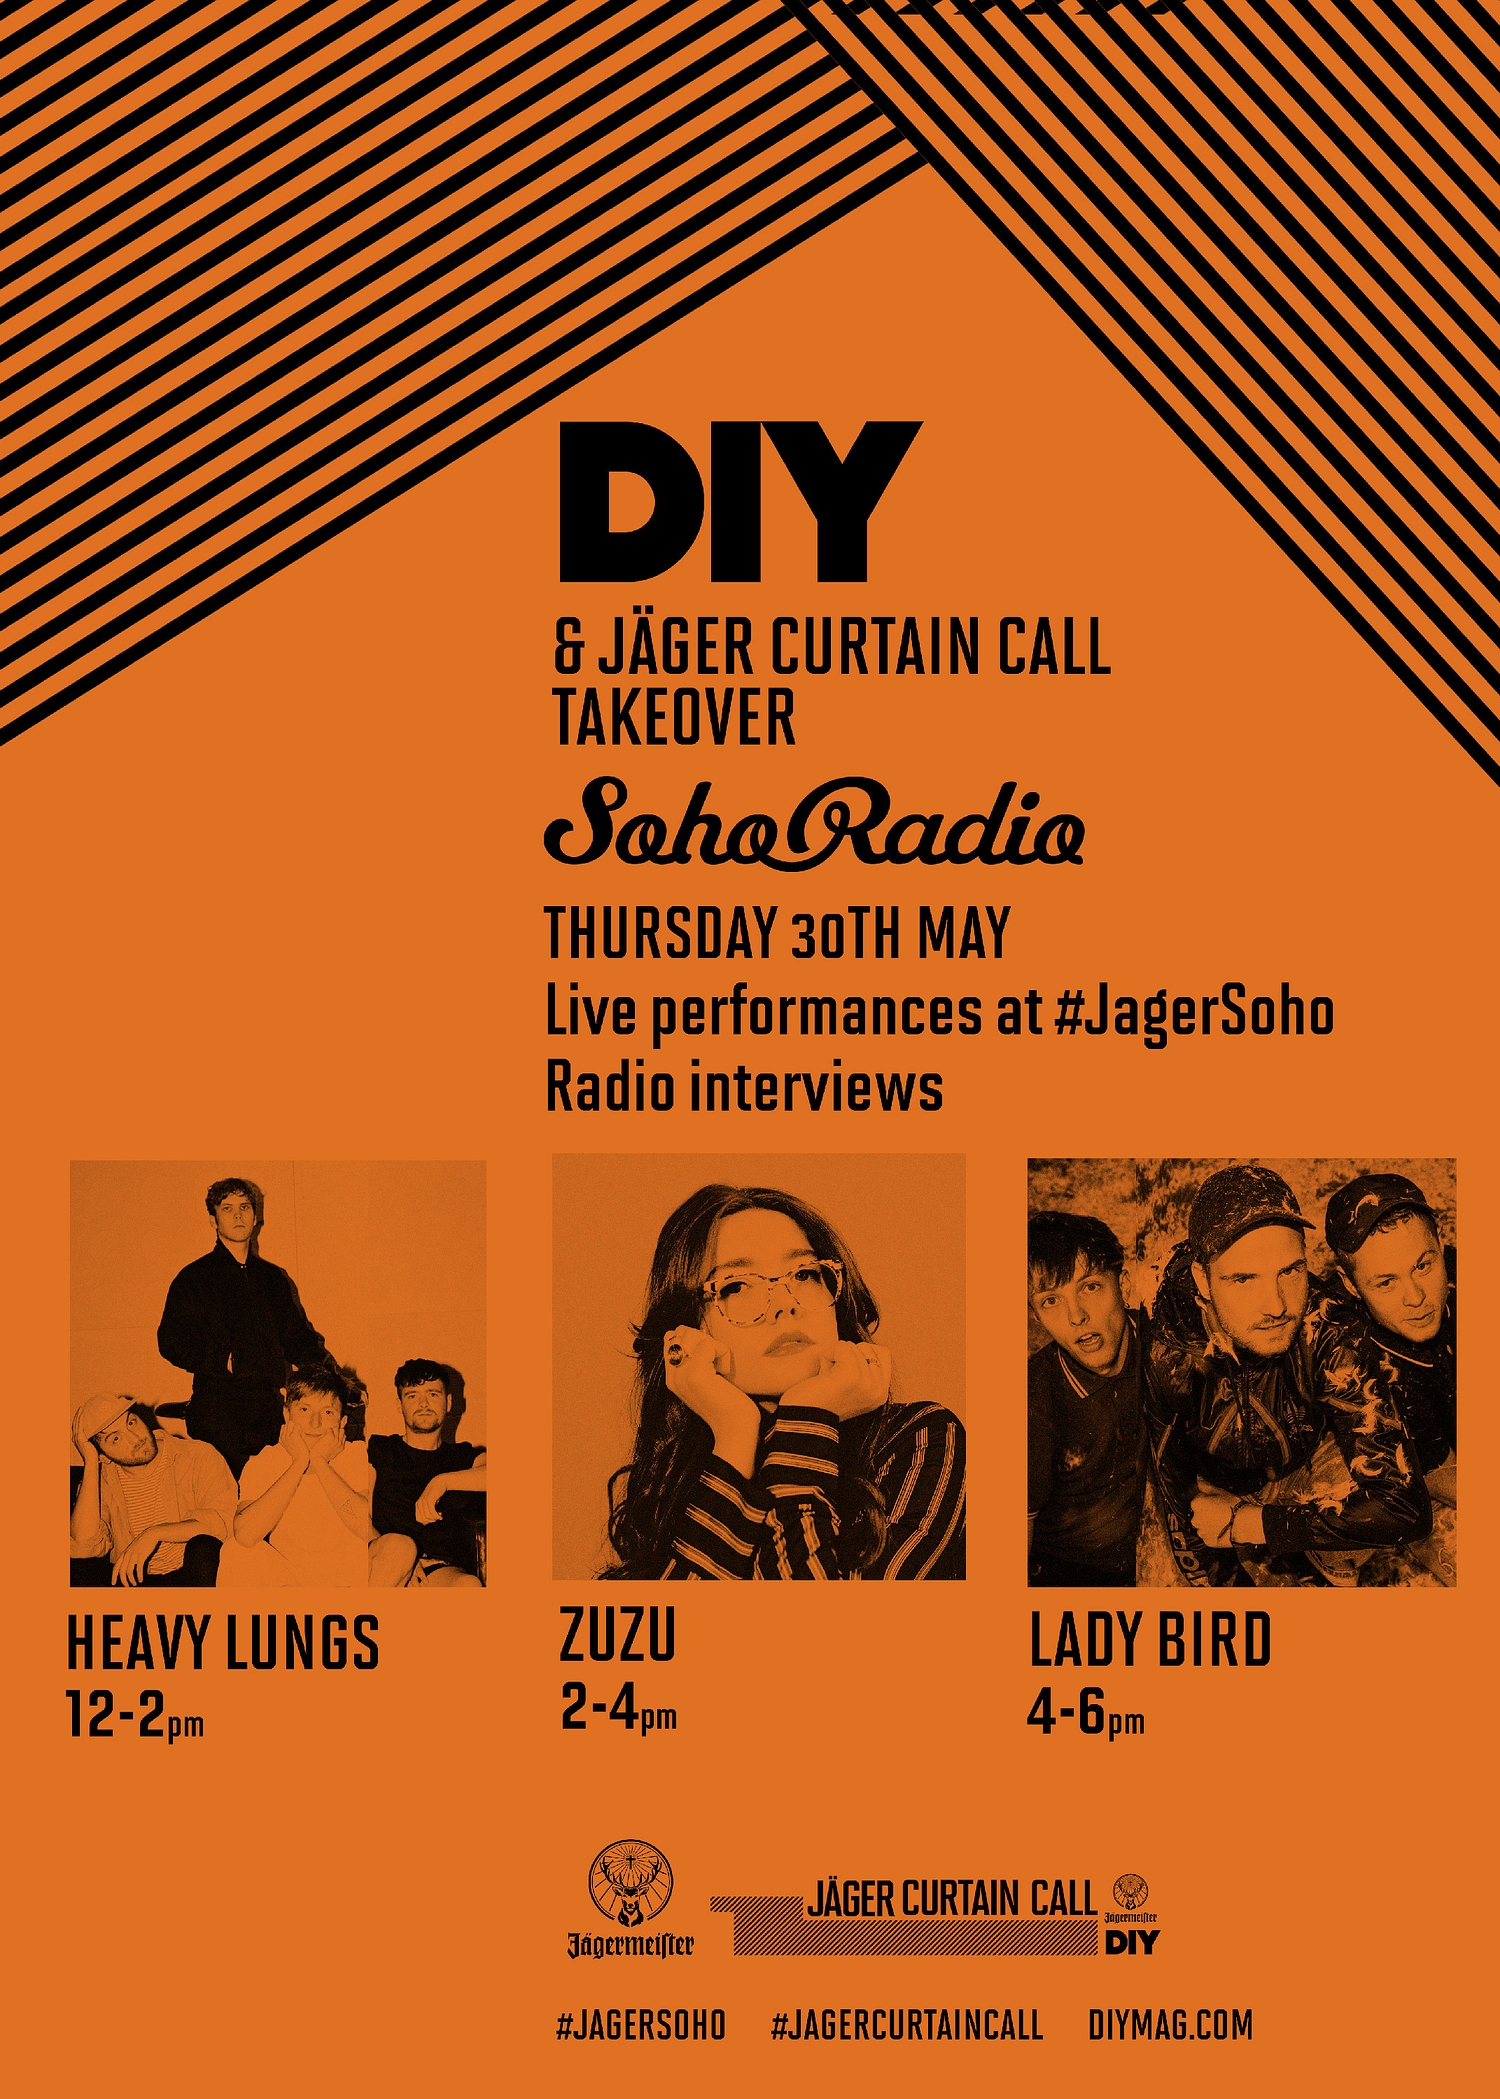 Heavy Lungs, Lady Bird & Zuzu to appear on Soho Radio as part of Jäger Curtain Call